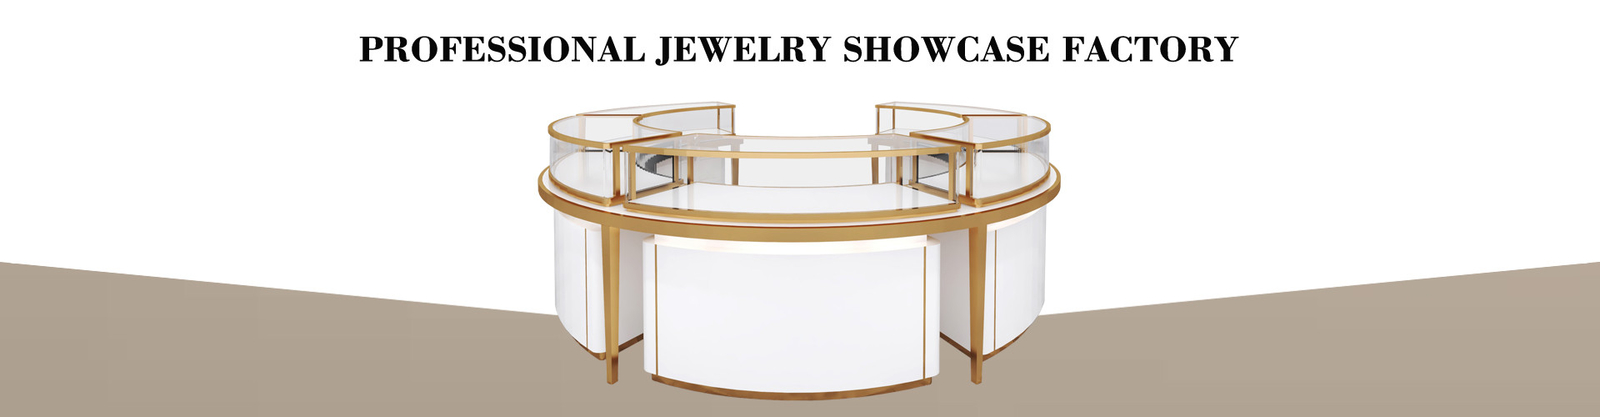 Jewelry display case.